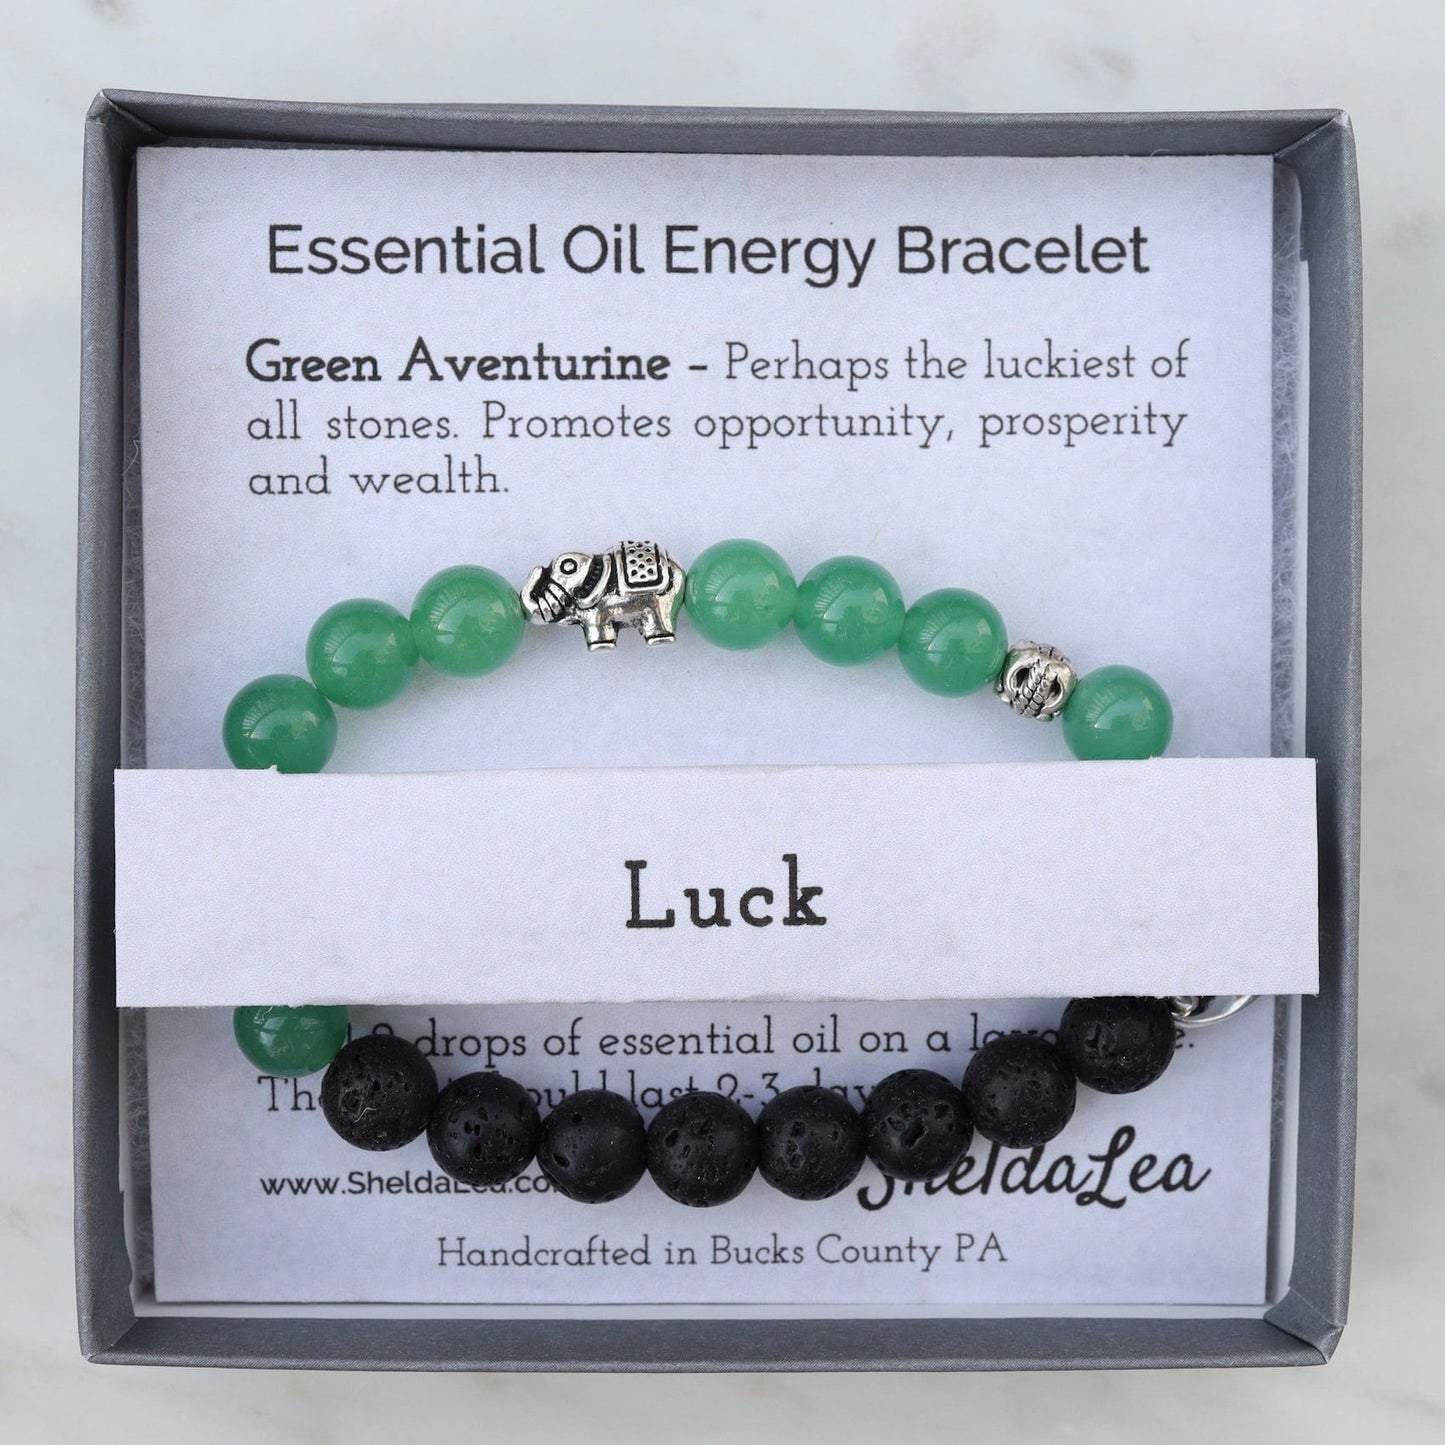 BRC Essential Oil Energy Bracelet - Green Aventurine - Luck